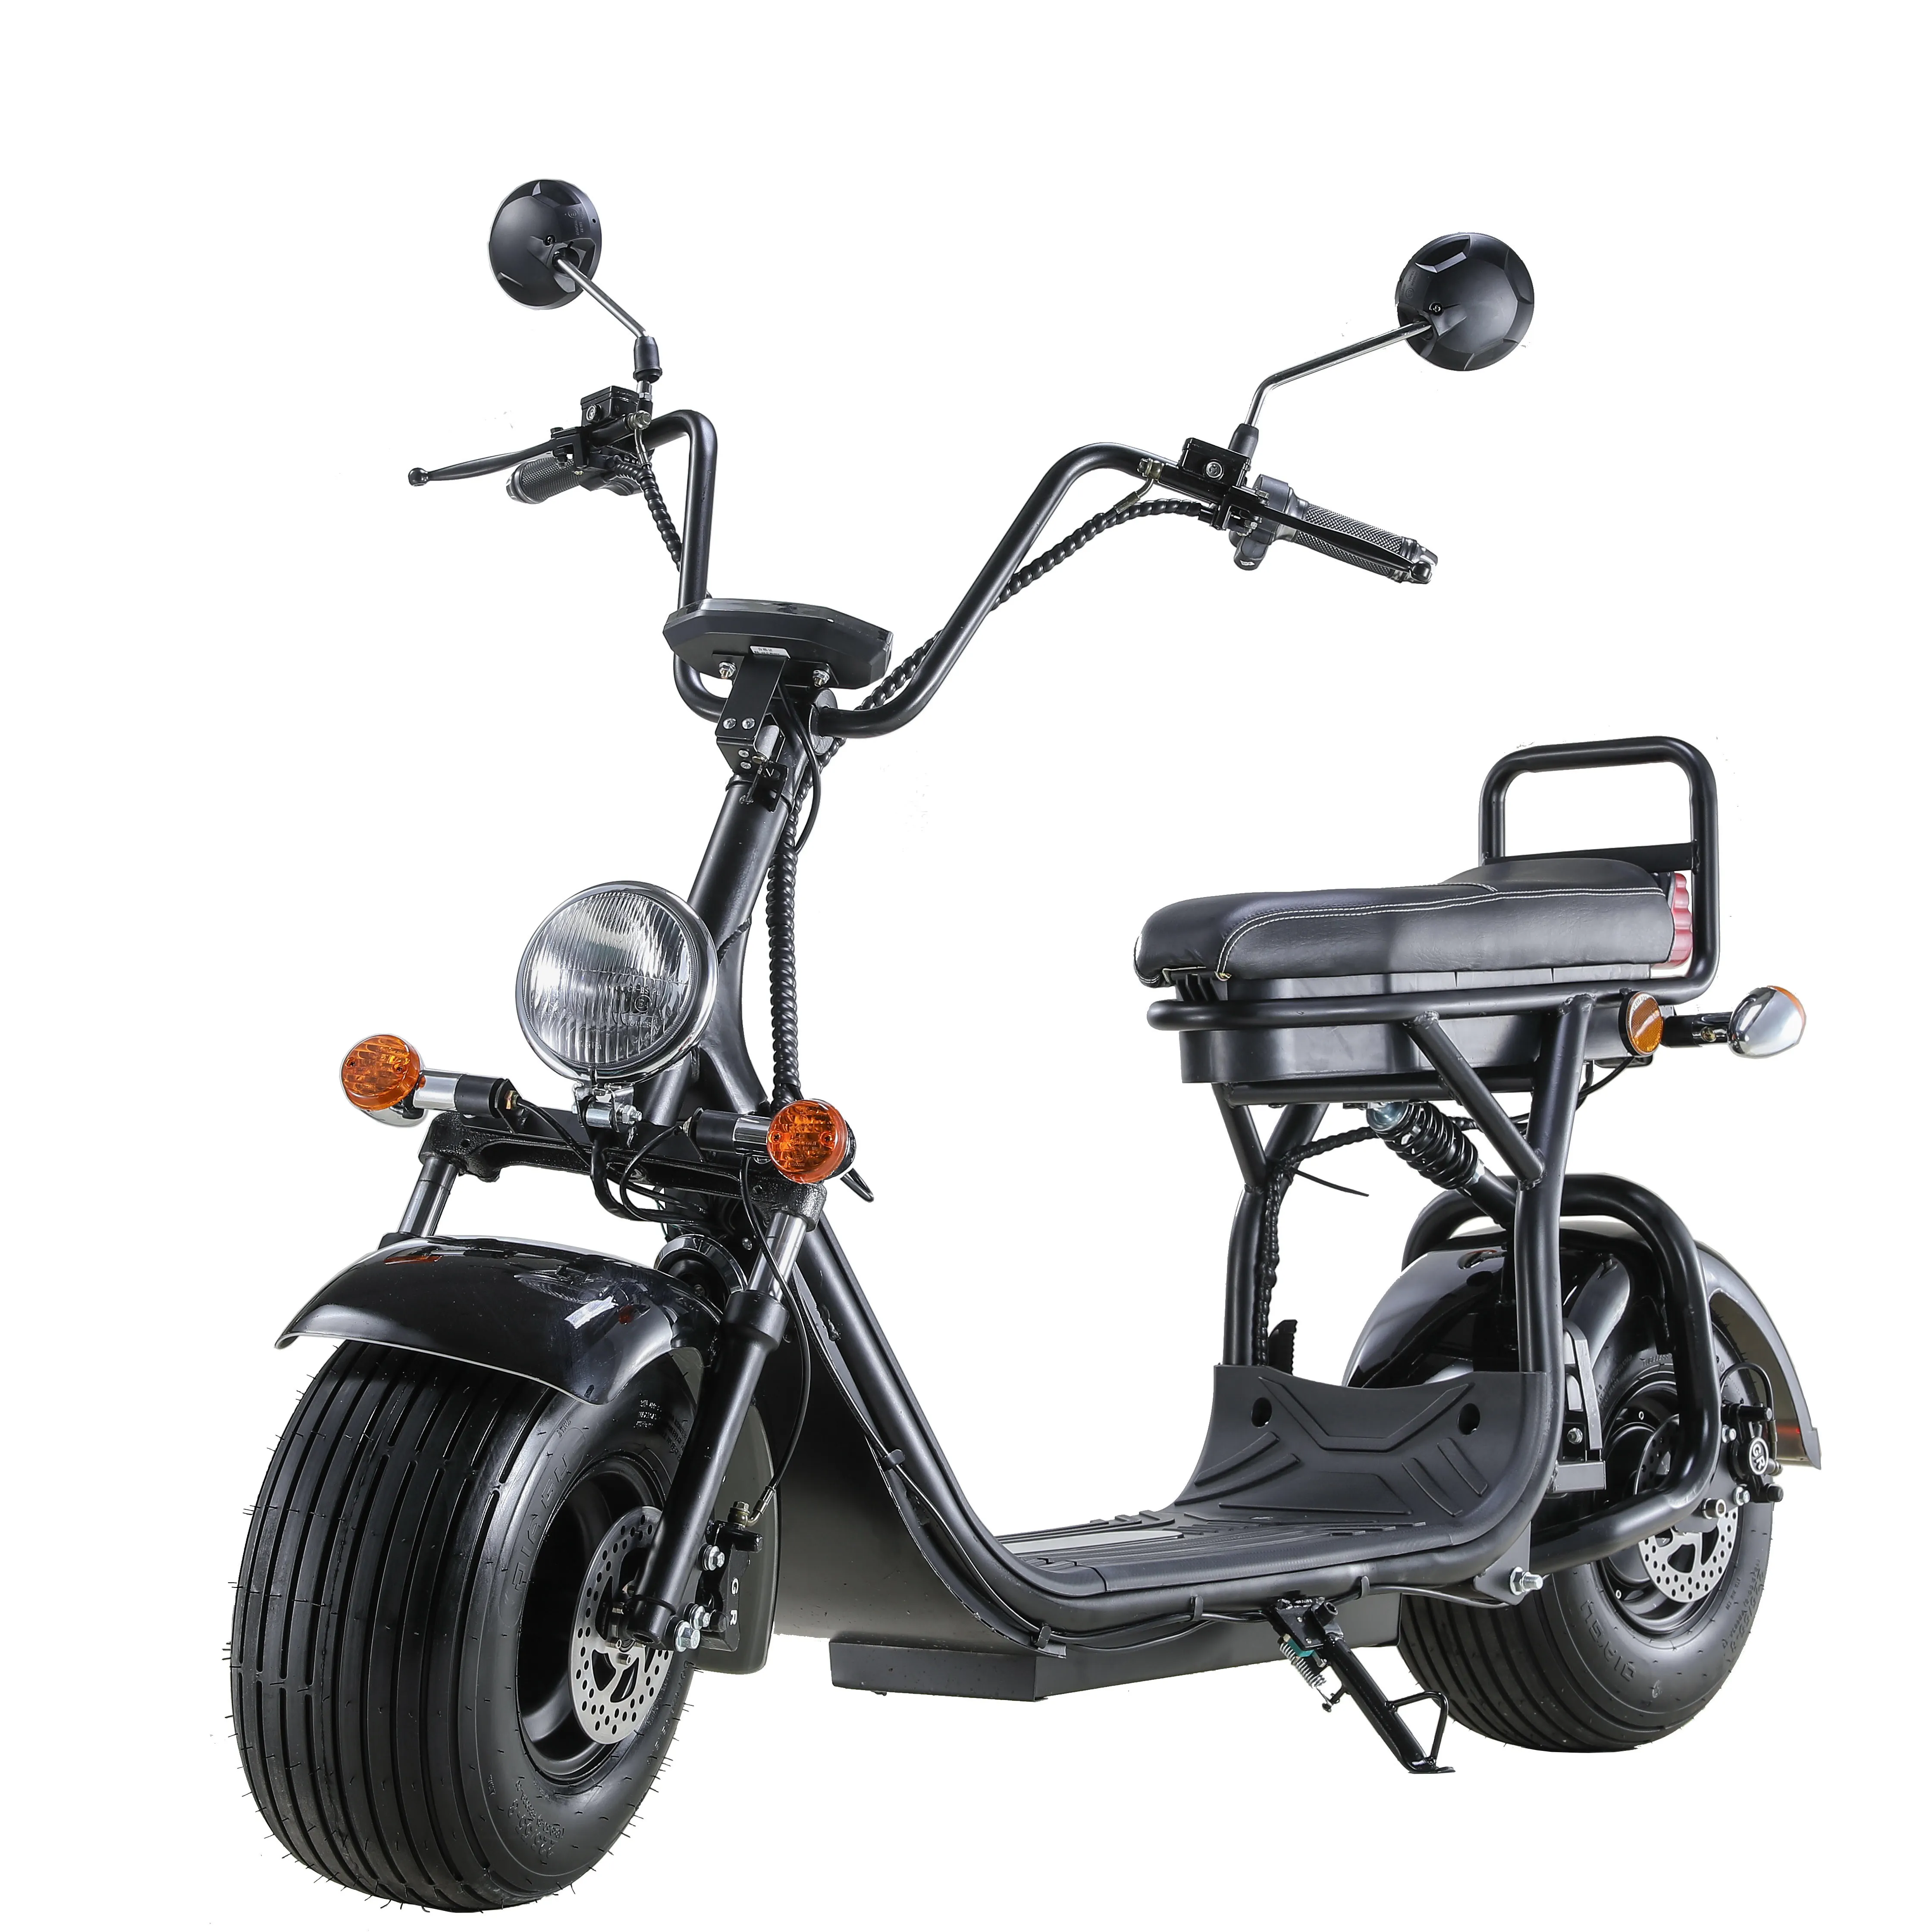 Kasko Motocicleta Choope motosiklet/bisiklet/Citycoco/elektrikli Scooter/bisiklet kabuk prototip